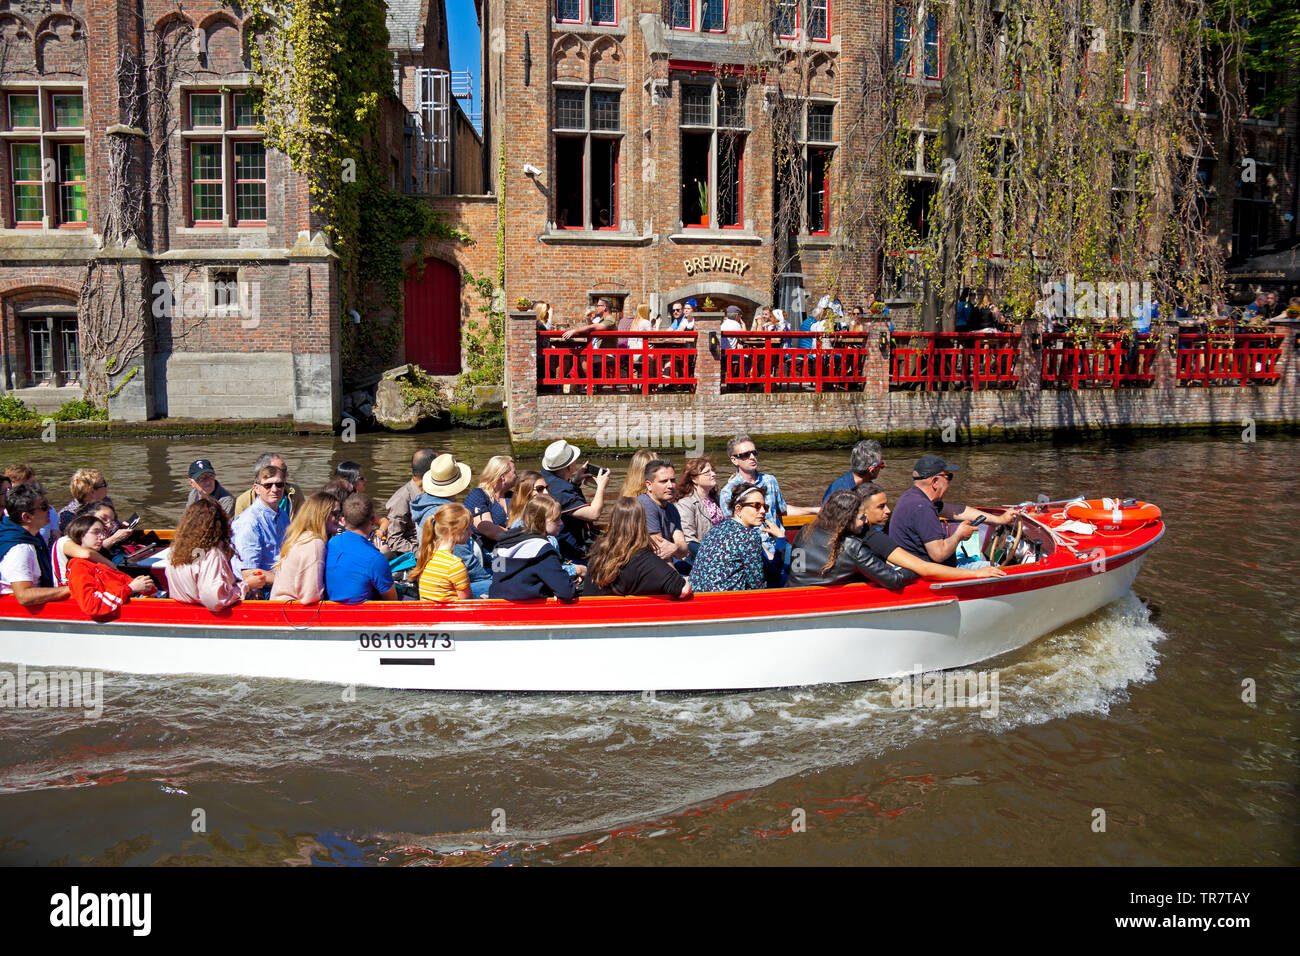 Bruges, visites en bateau, Belgique, Europe Banque D'Images